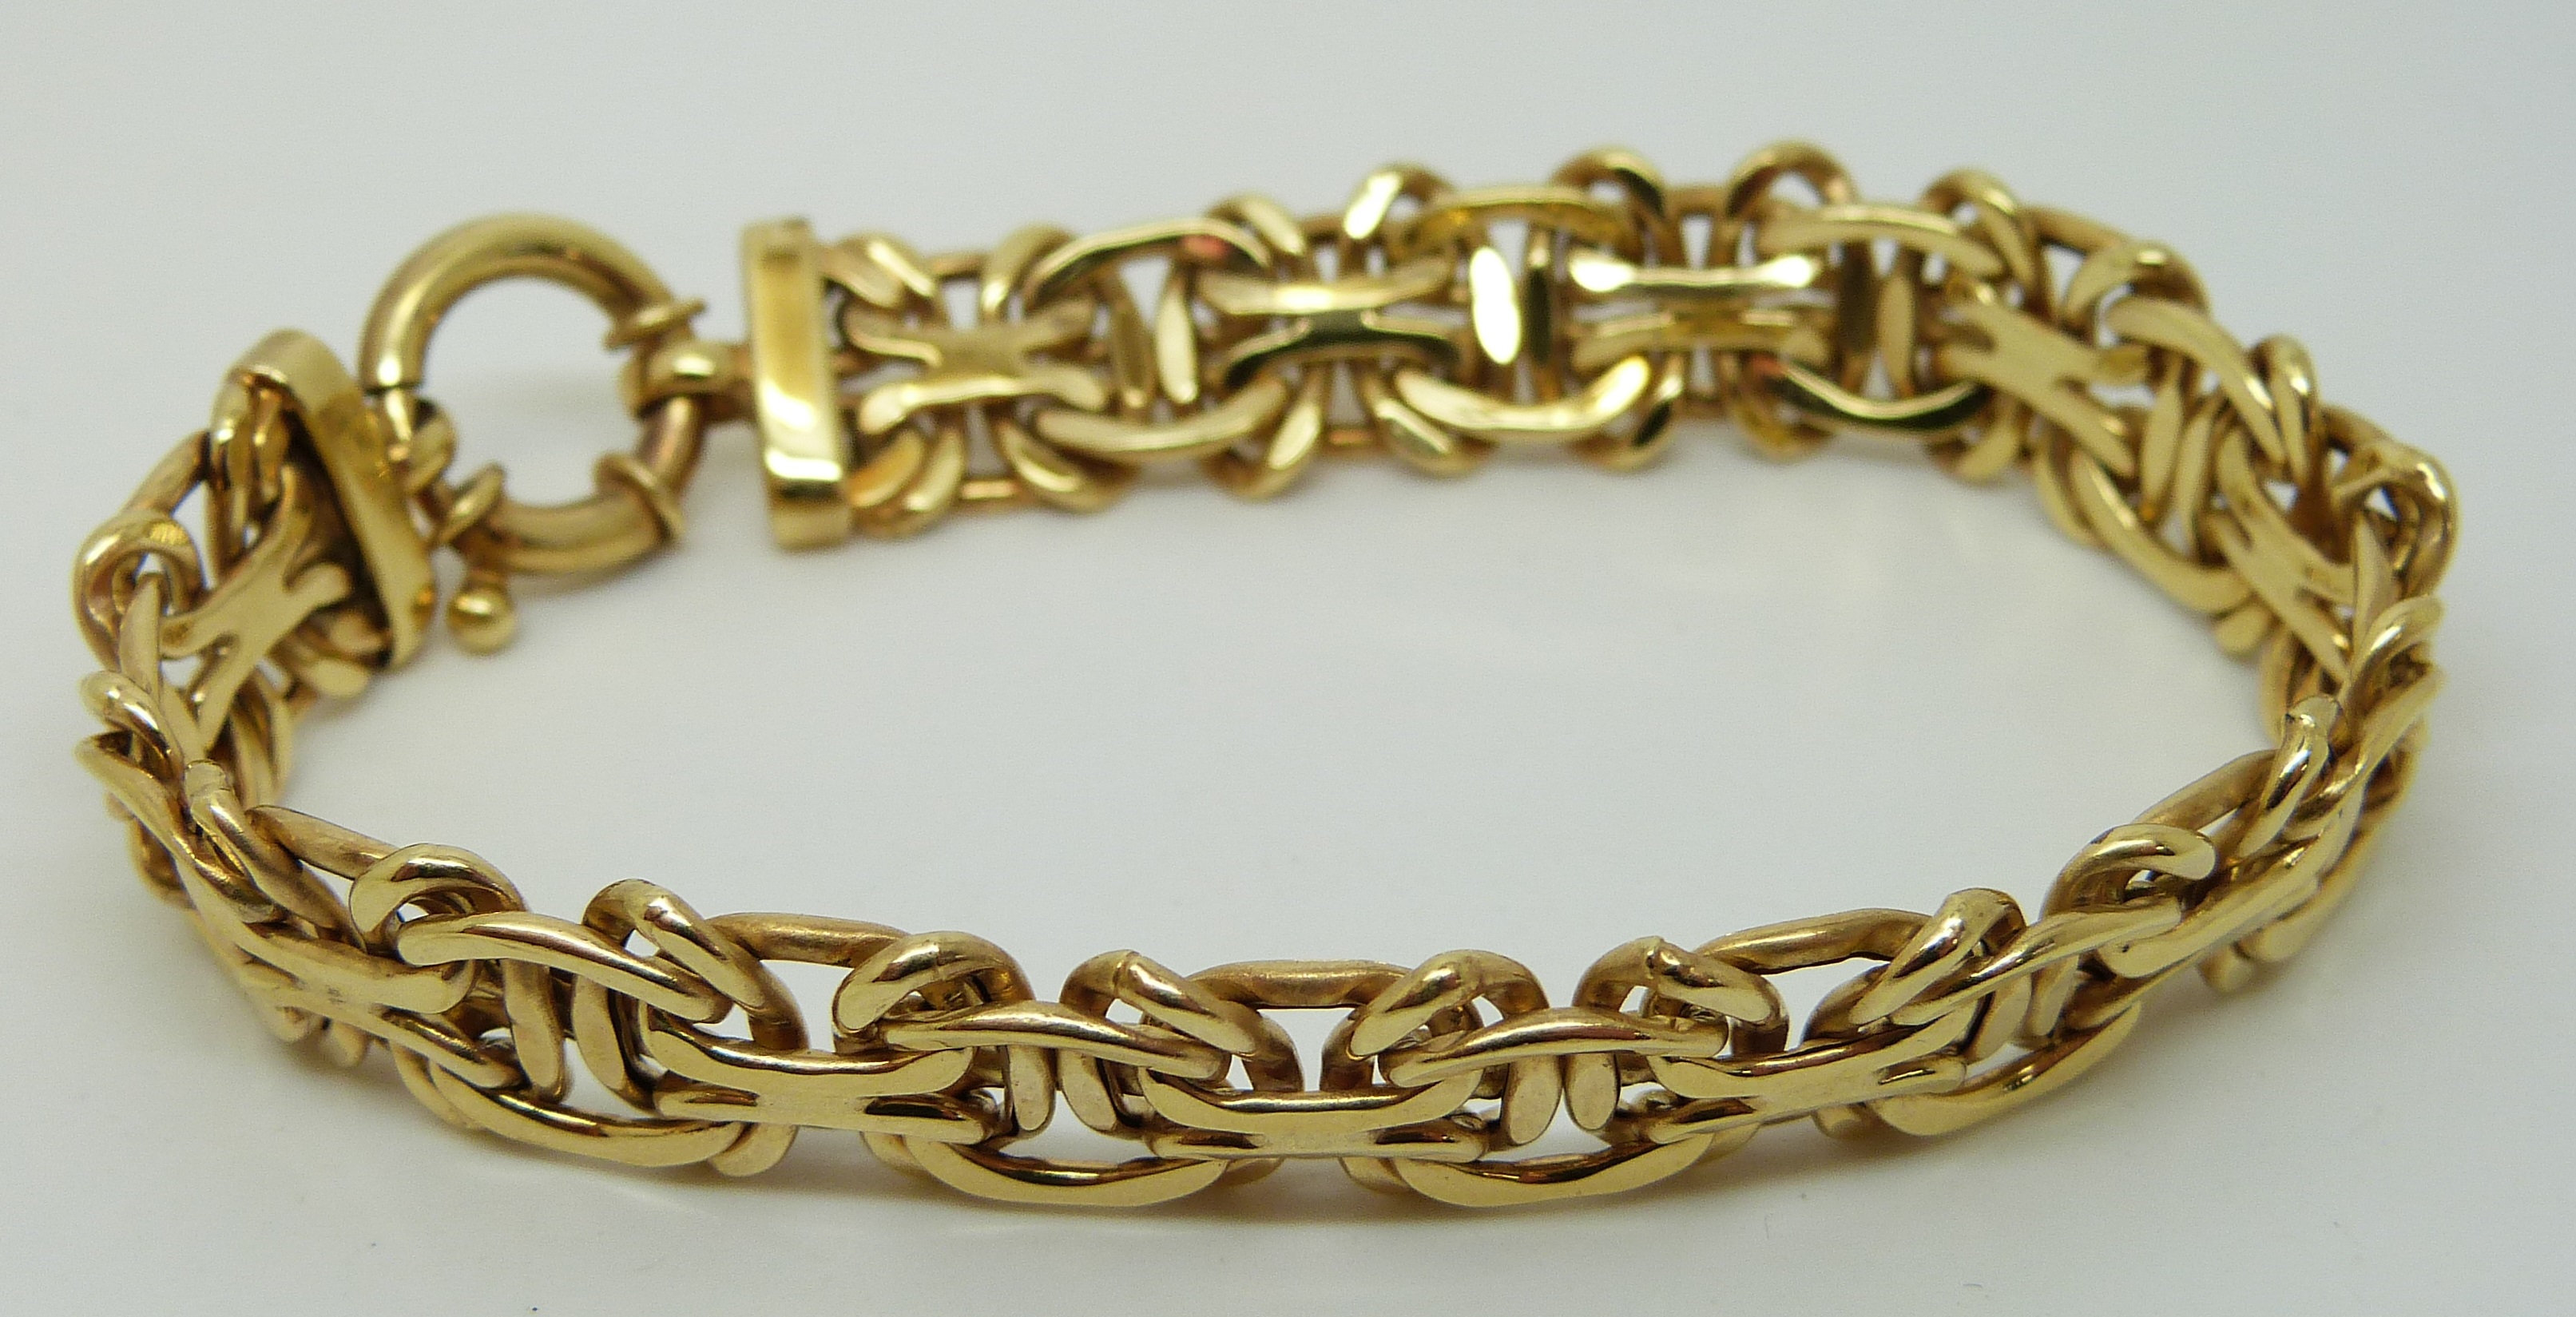 A 9ct gold bracelet in a plaited design, 9.